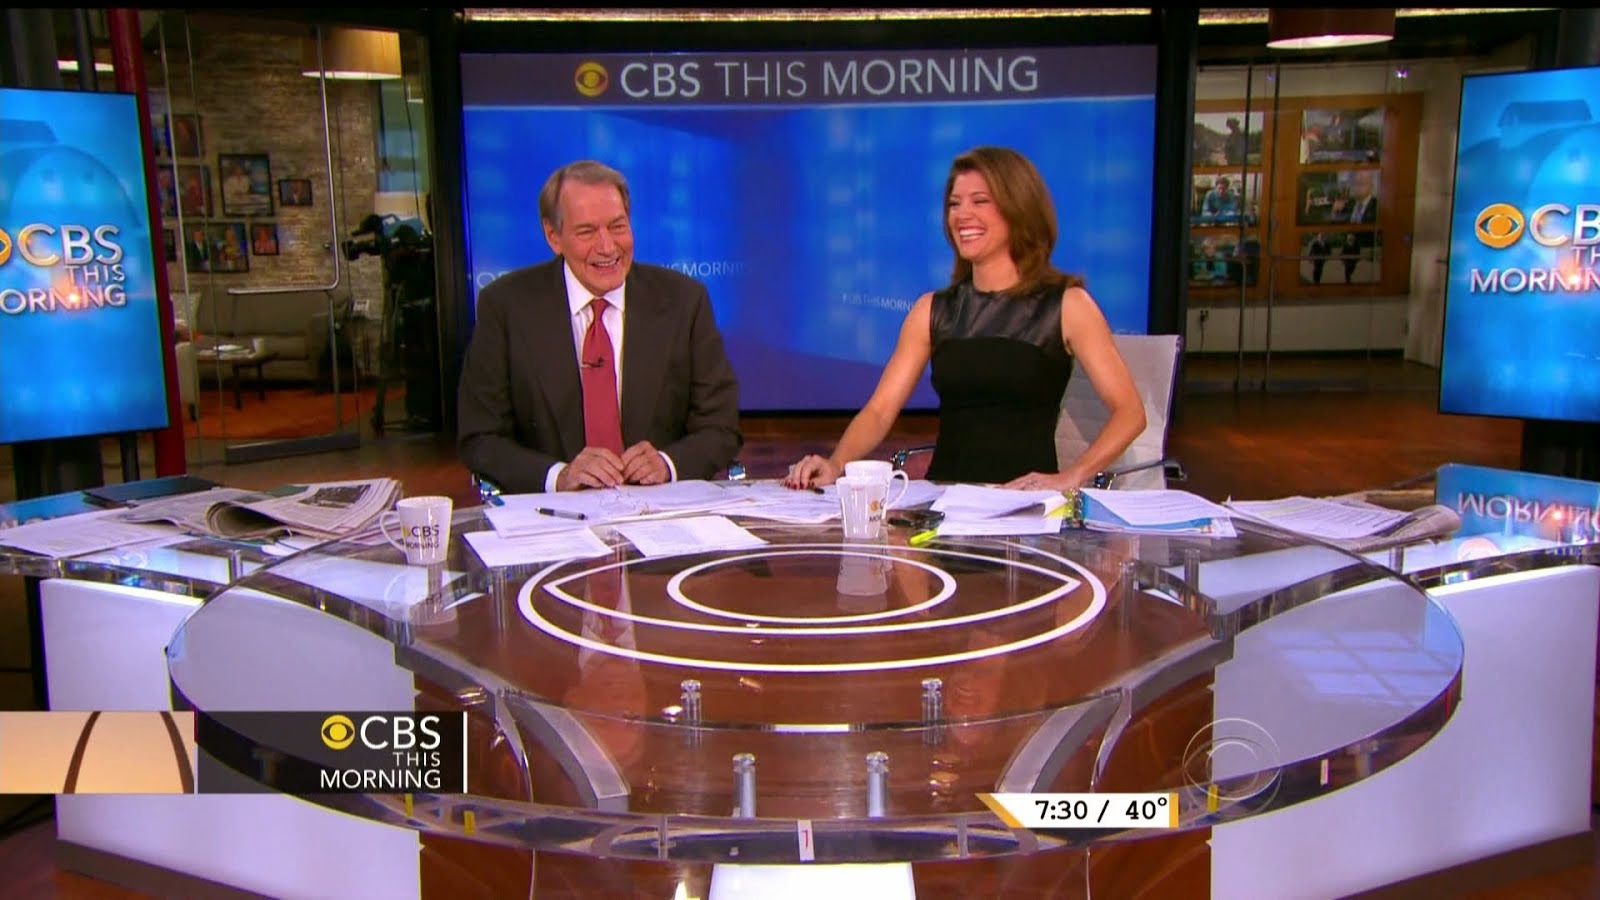 CBS This Morning